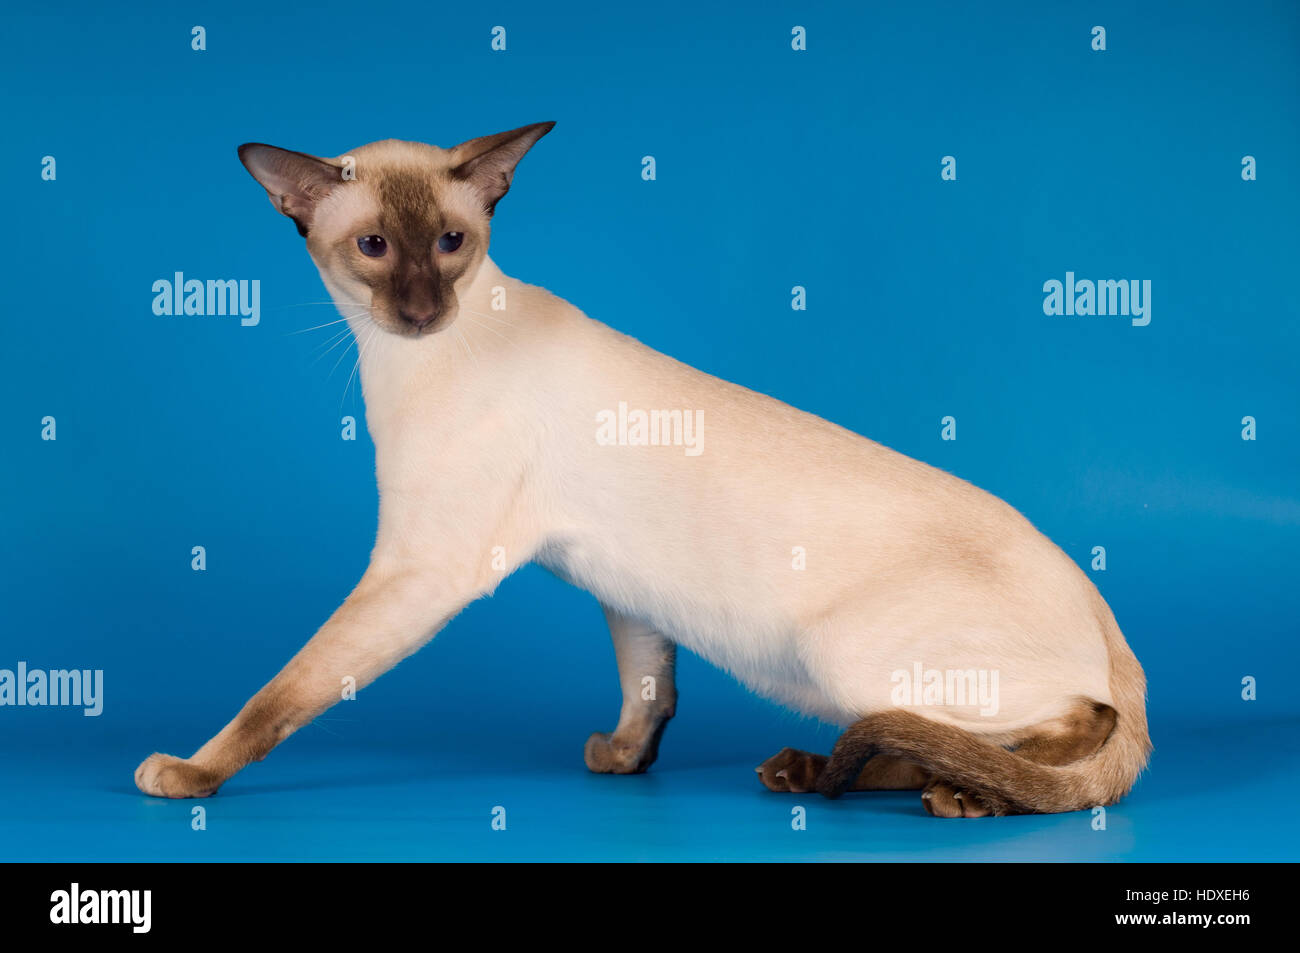 Siam cat portrait on blue background Stock Photo